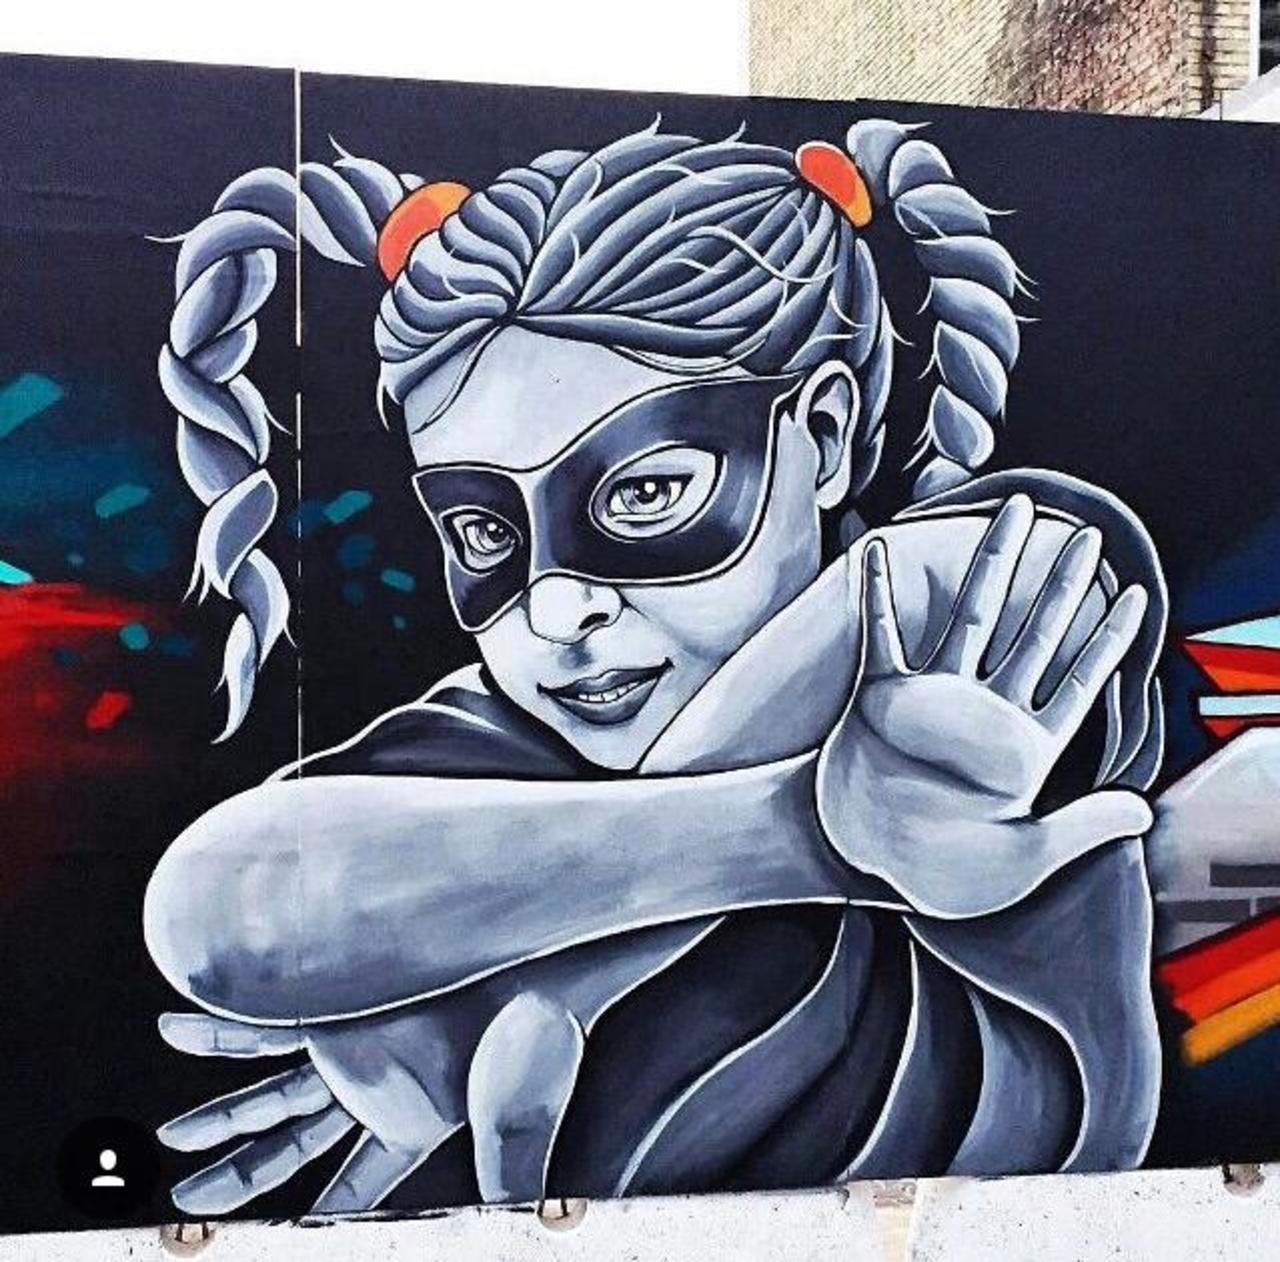 RT belilac "RT belilac "RT belilac "Street Art by Stinehvid 

#art #graffiti #mural #streetart http://t.co/HgV0qG5l1Y"""